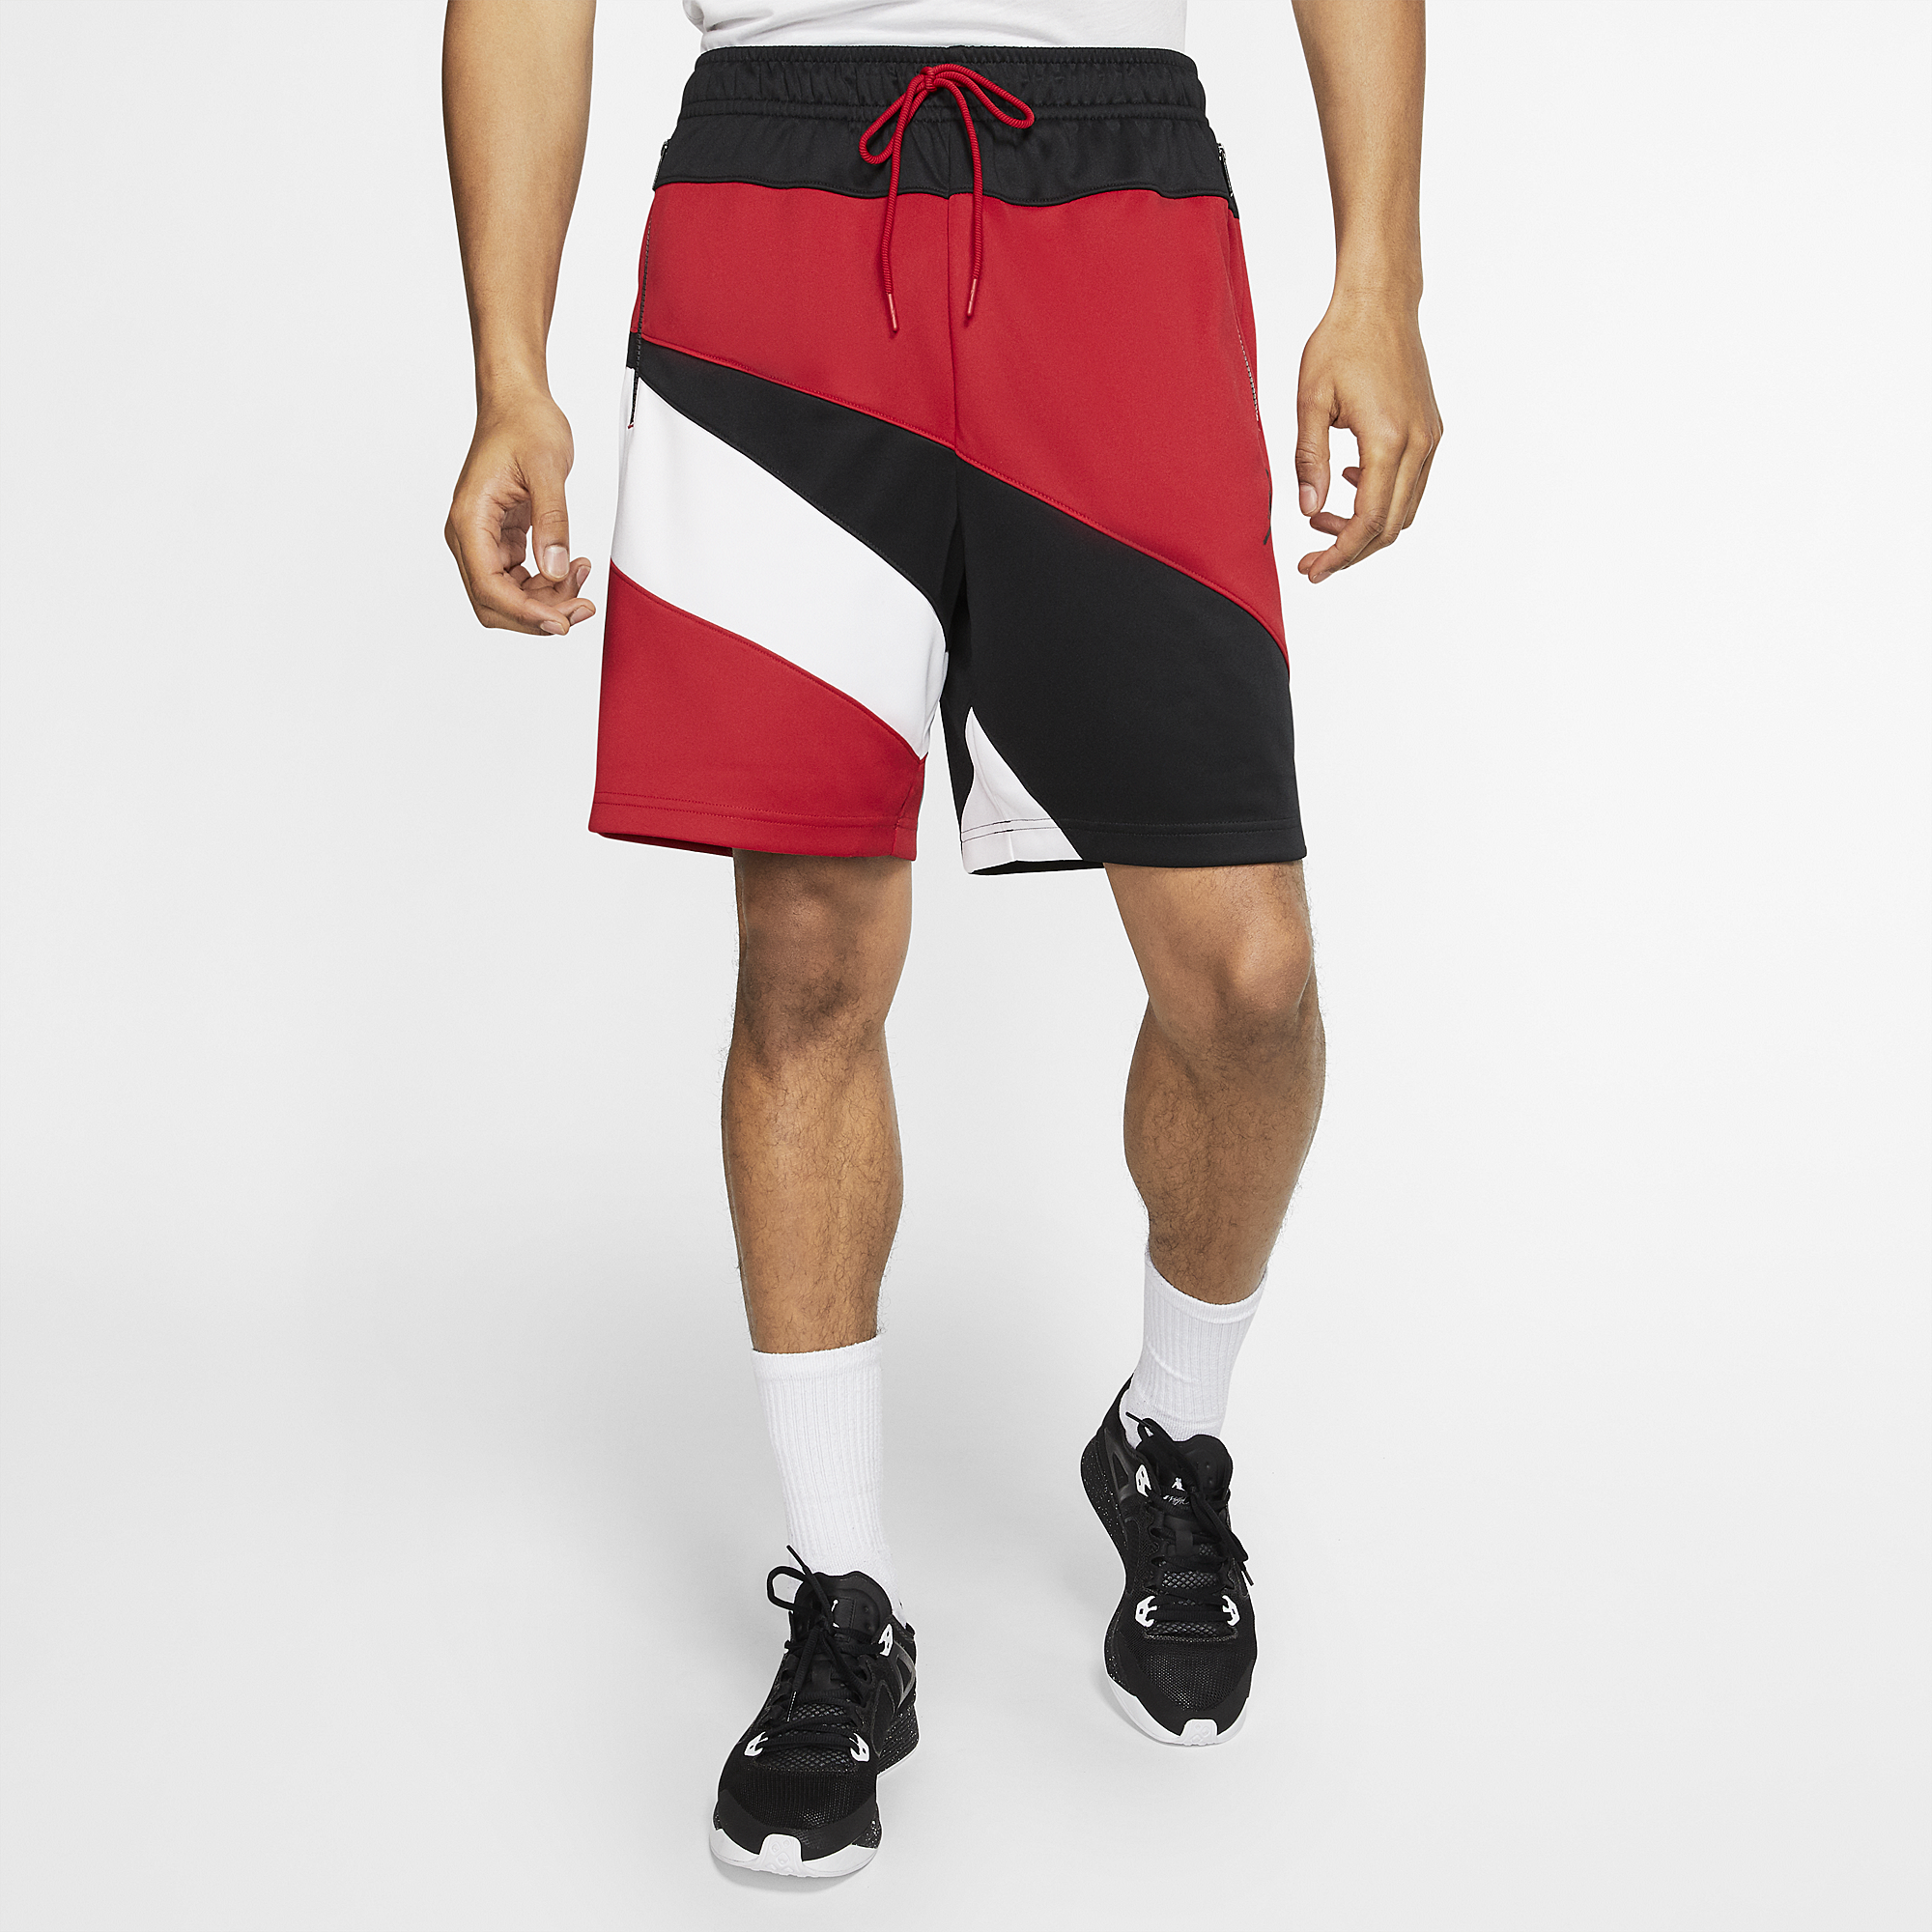 eastbay jordan shorts